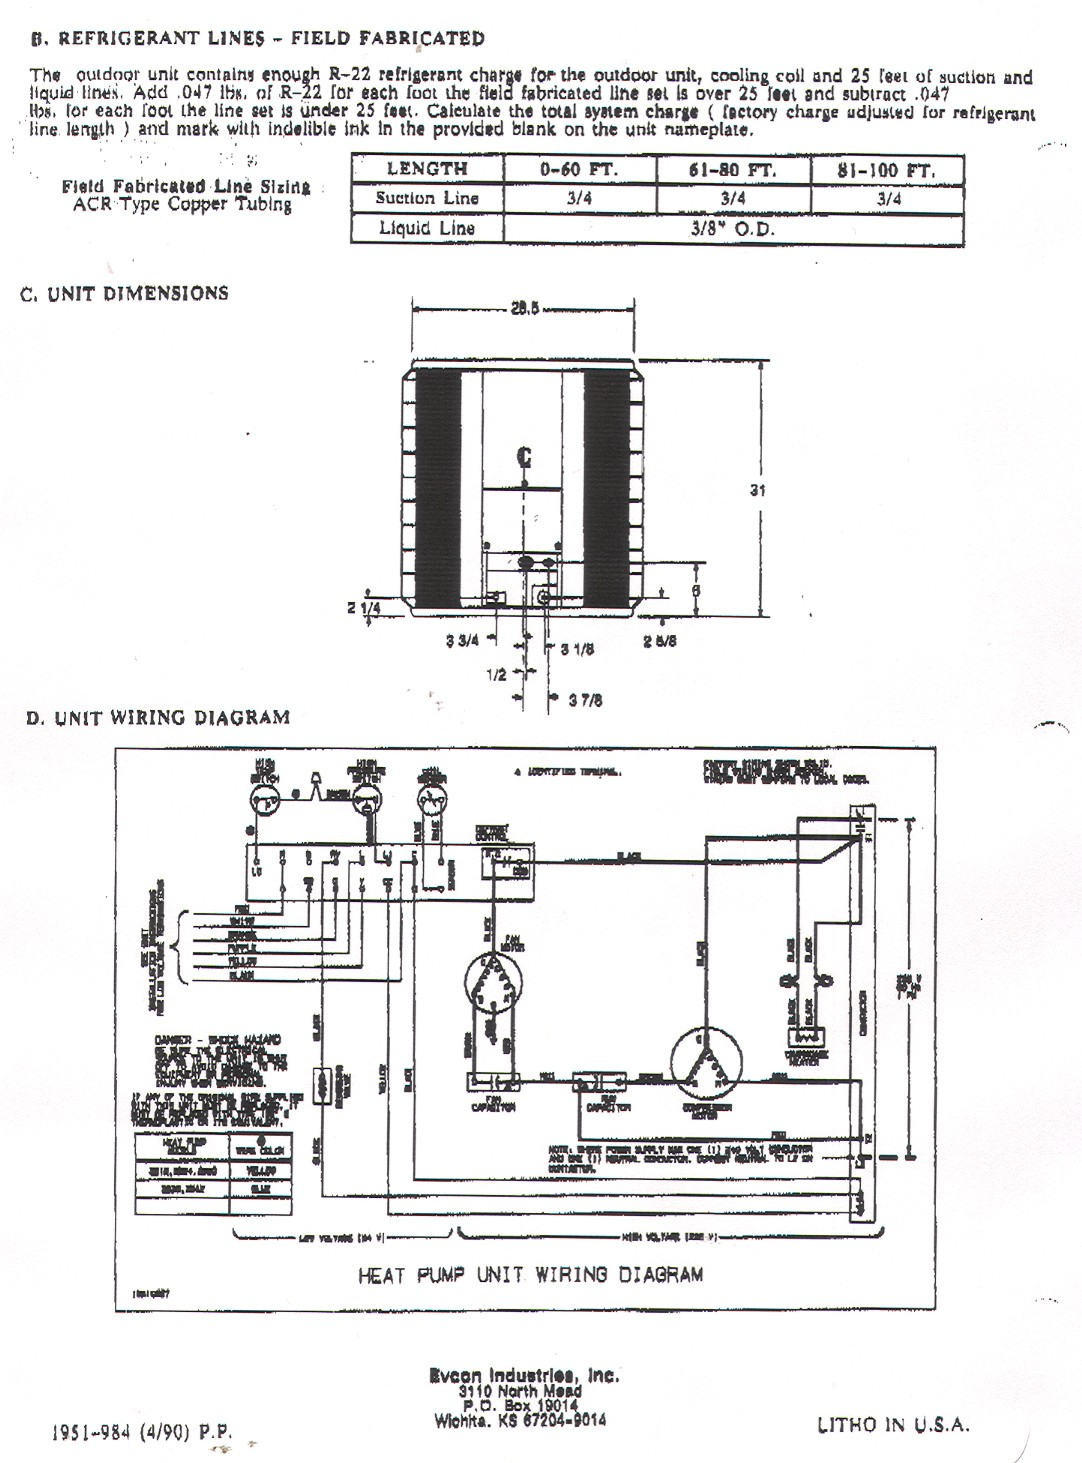 Electric Heat Pump Wiring Diagram | Wiring Diagram - Goodman Heat Pump Wiring Diagram